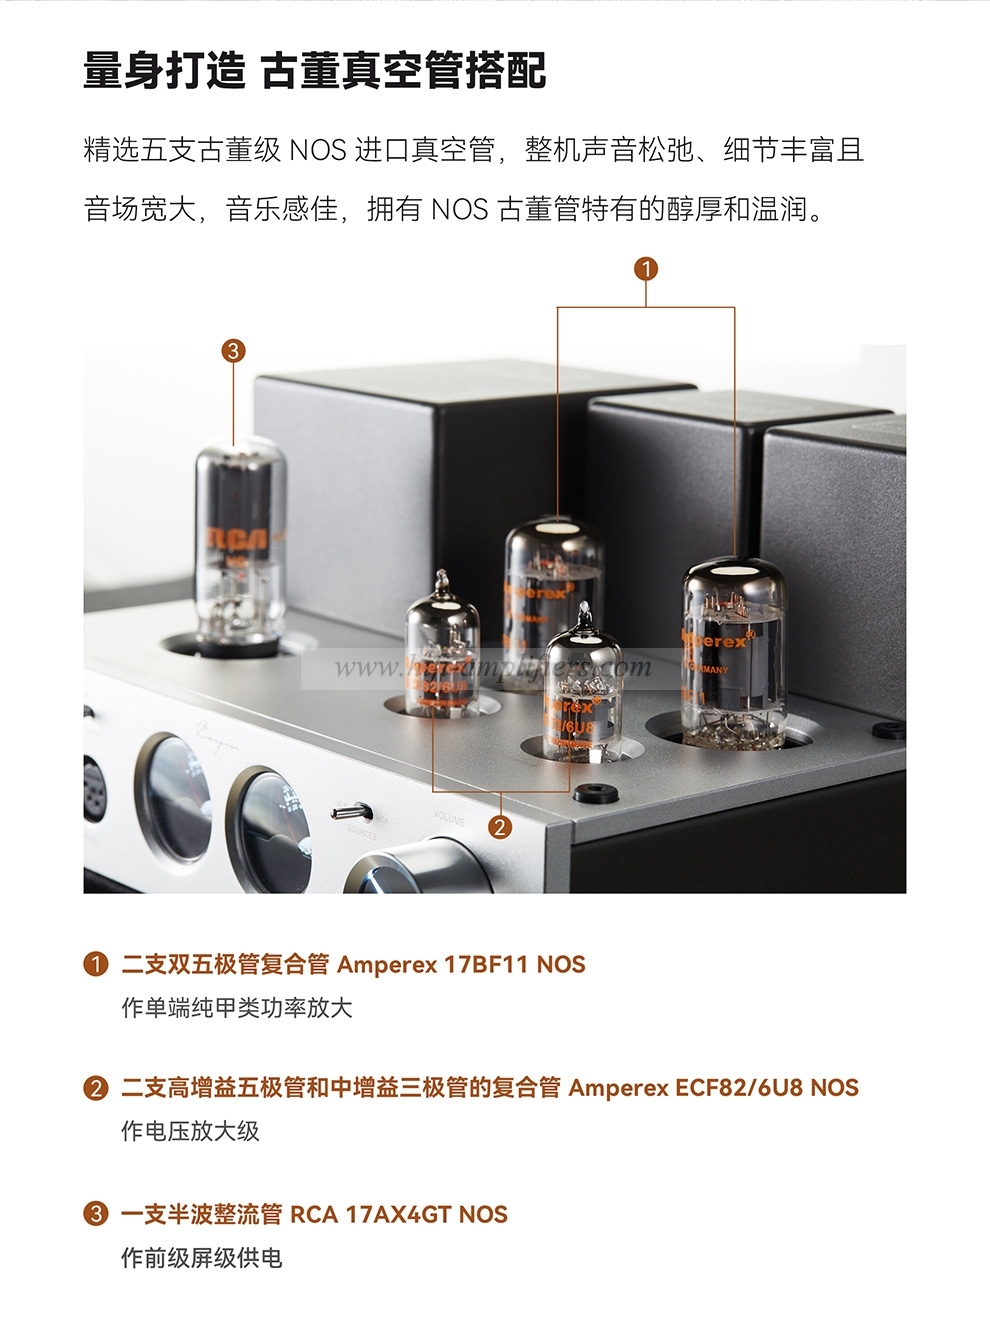 Cayin HA-2A Vacuum tube Earphone Power Amplifier NOS tube Earphone Amplifier XLR RCA